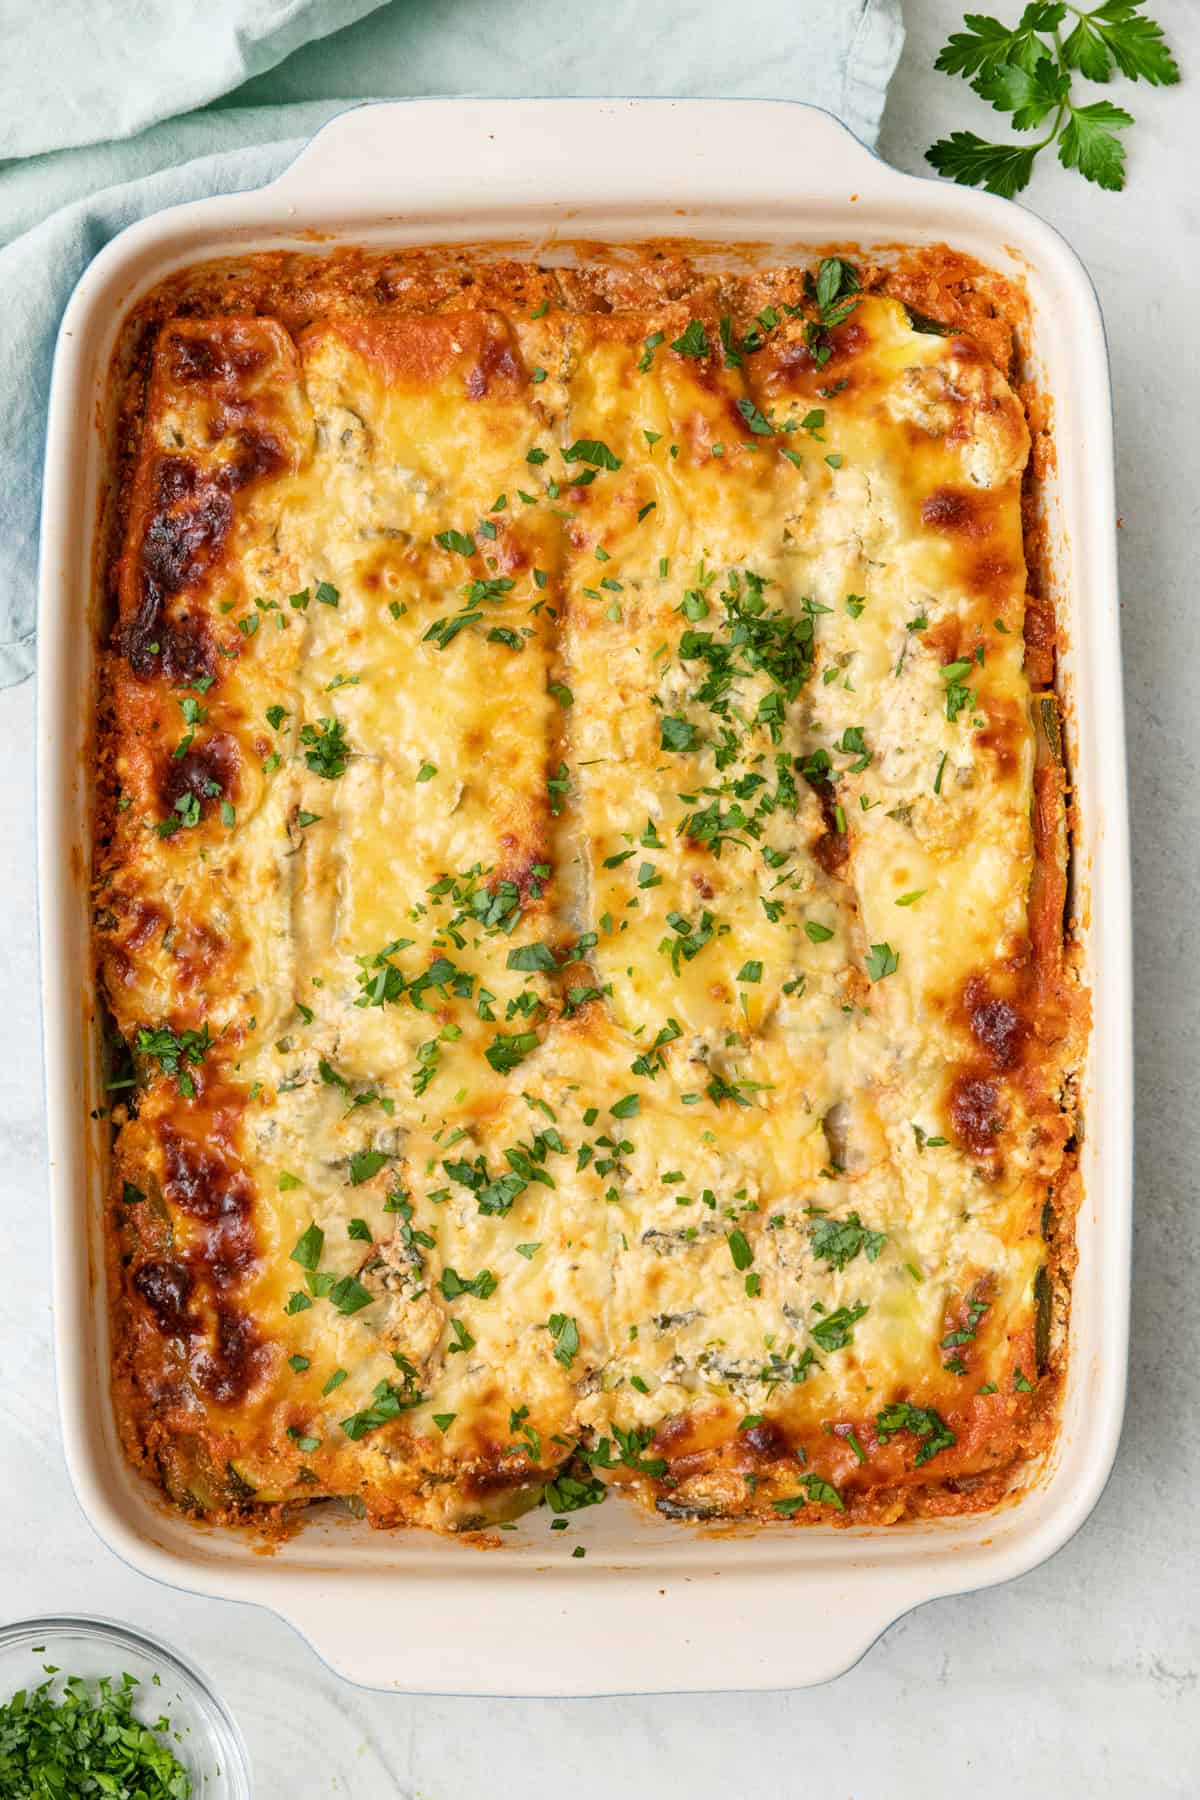 Zucchini Lasagna in a baking dish garnished with fresh parsley.